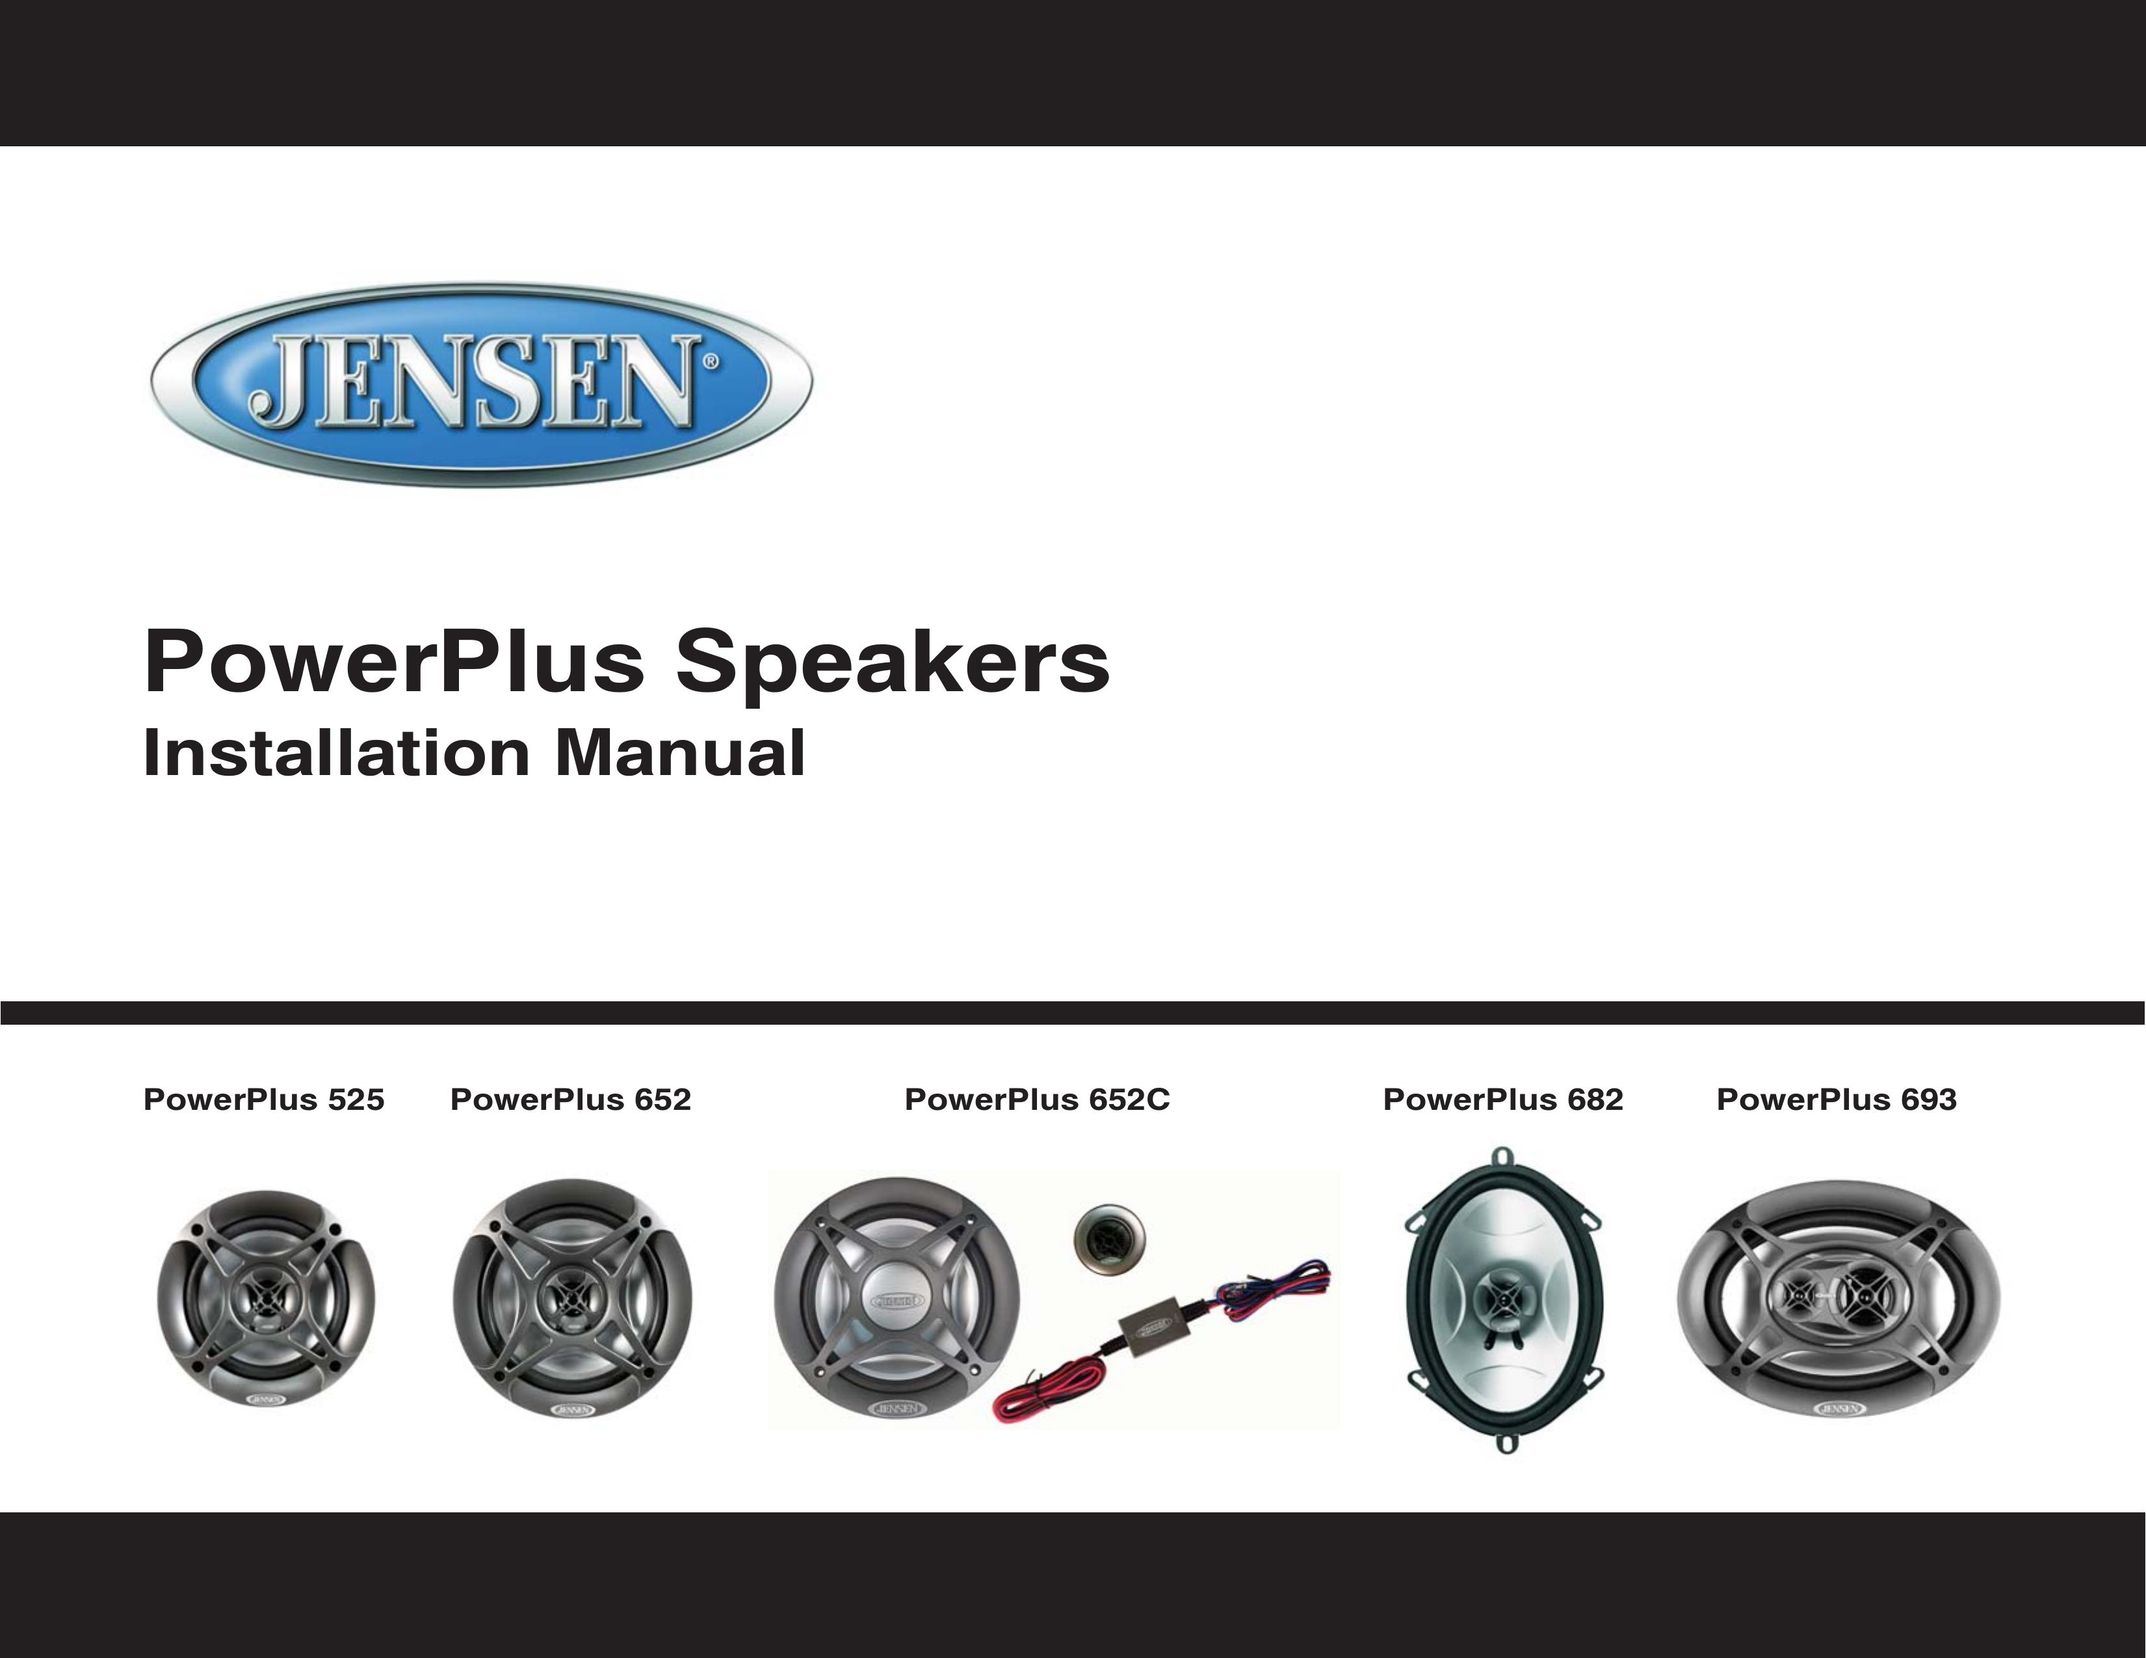 Jensen 682 Car Speaker User Manual